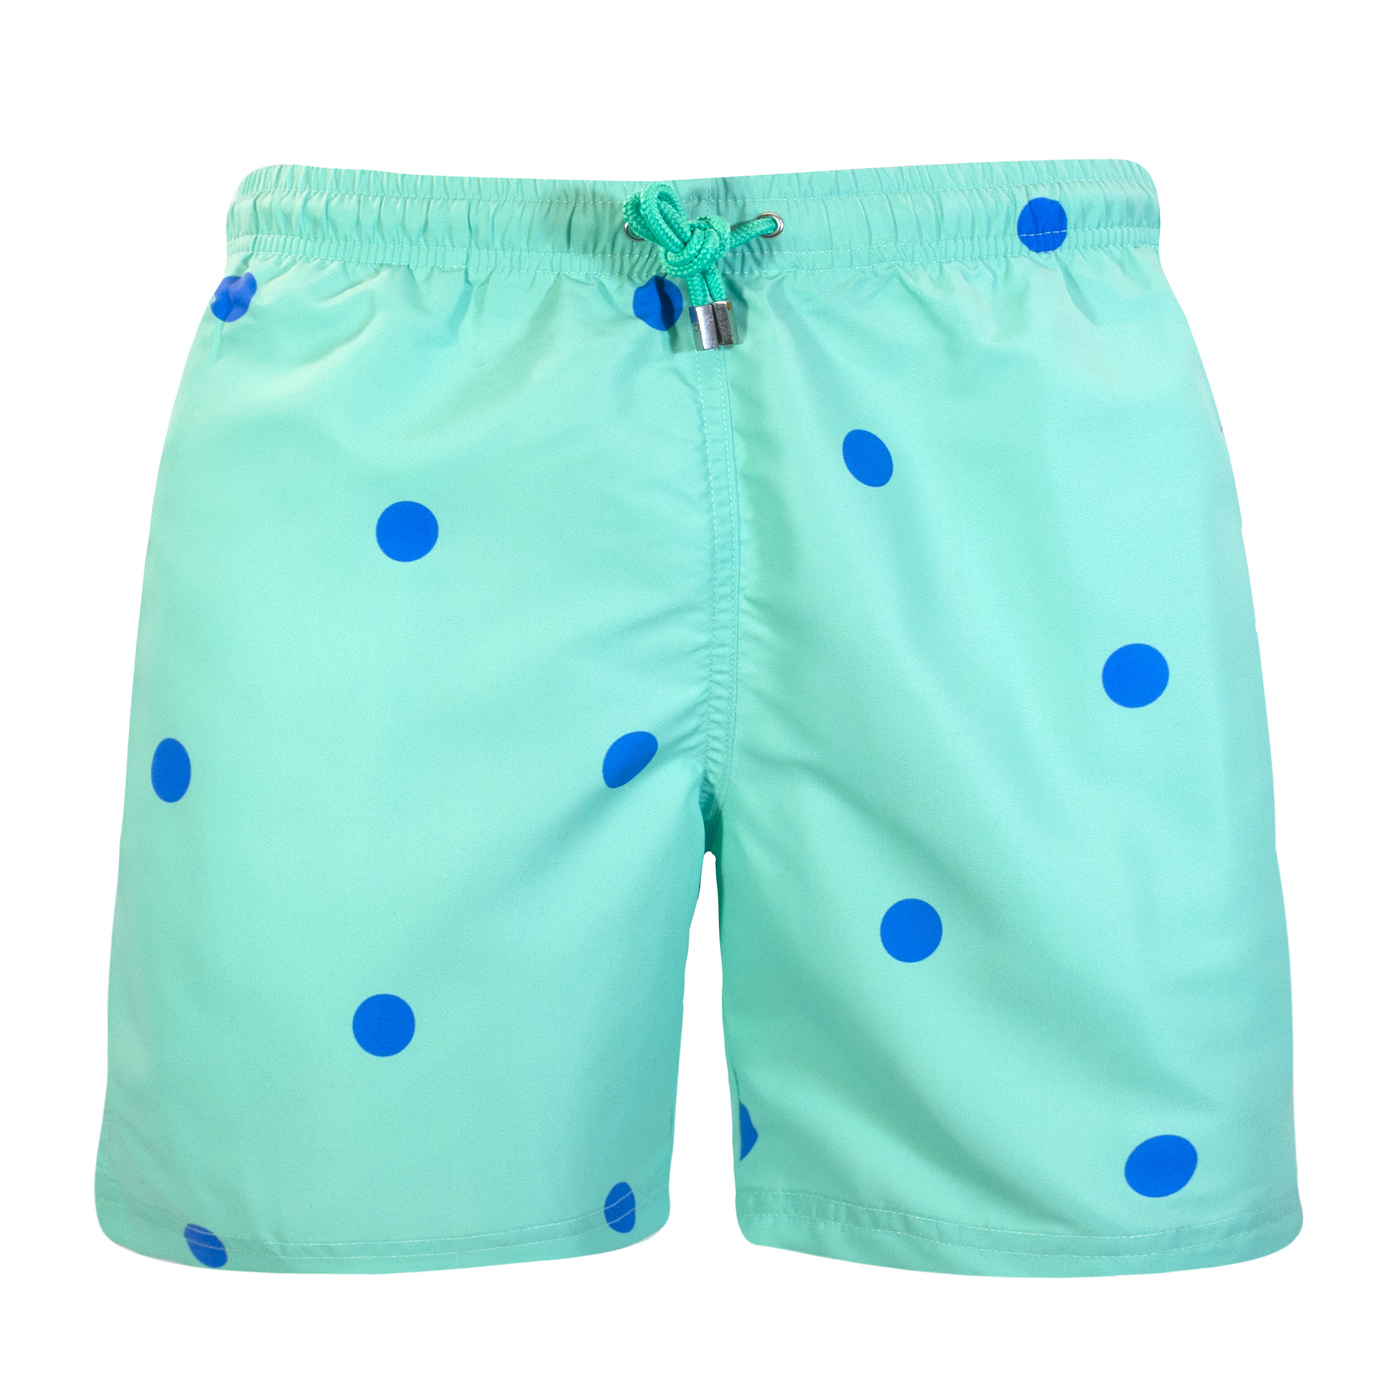 Buy Dots Swim Shorts online – Men's designer swimwear by Decisive